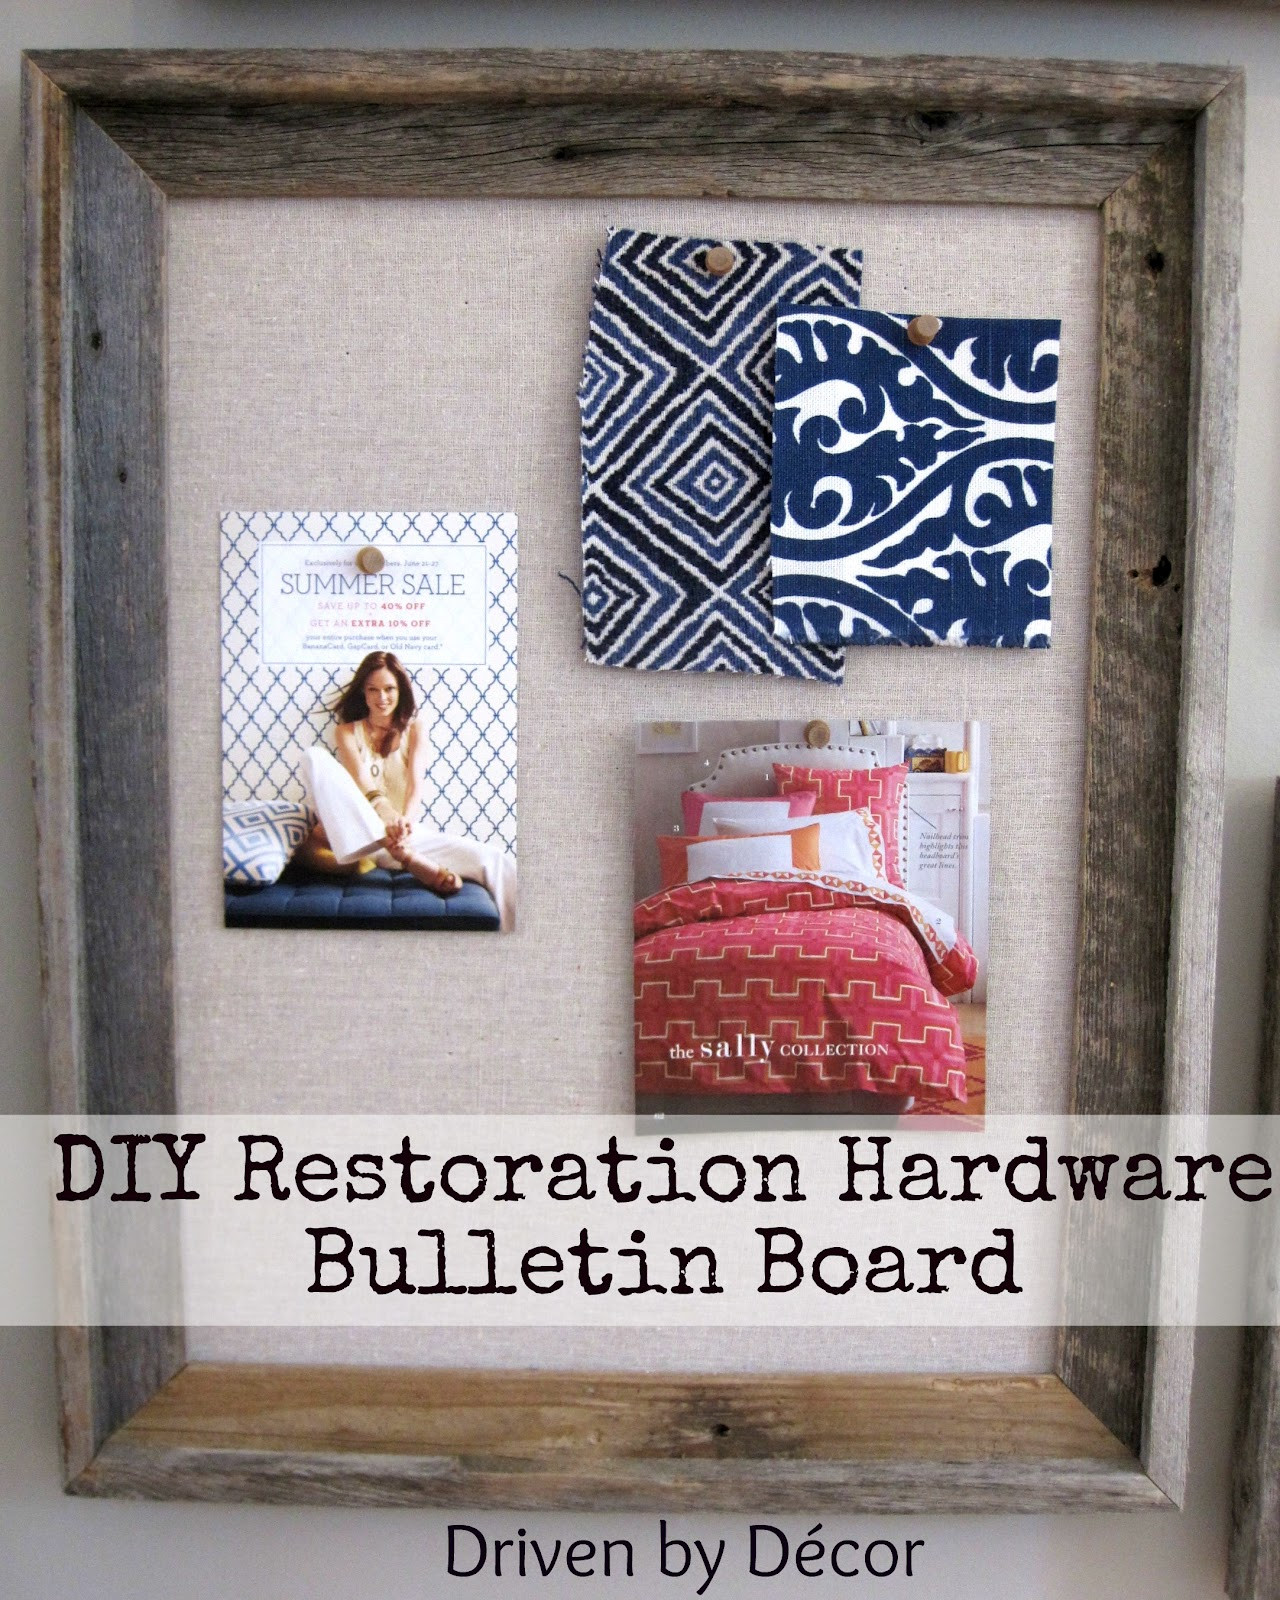 Best ideas about DIY Bulletin Board
. Save or Pin DIY Restoration Hardware Bulletin Board Now.